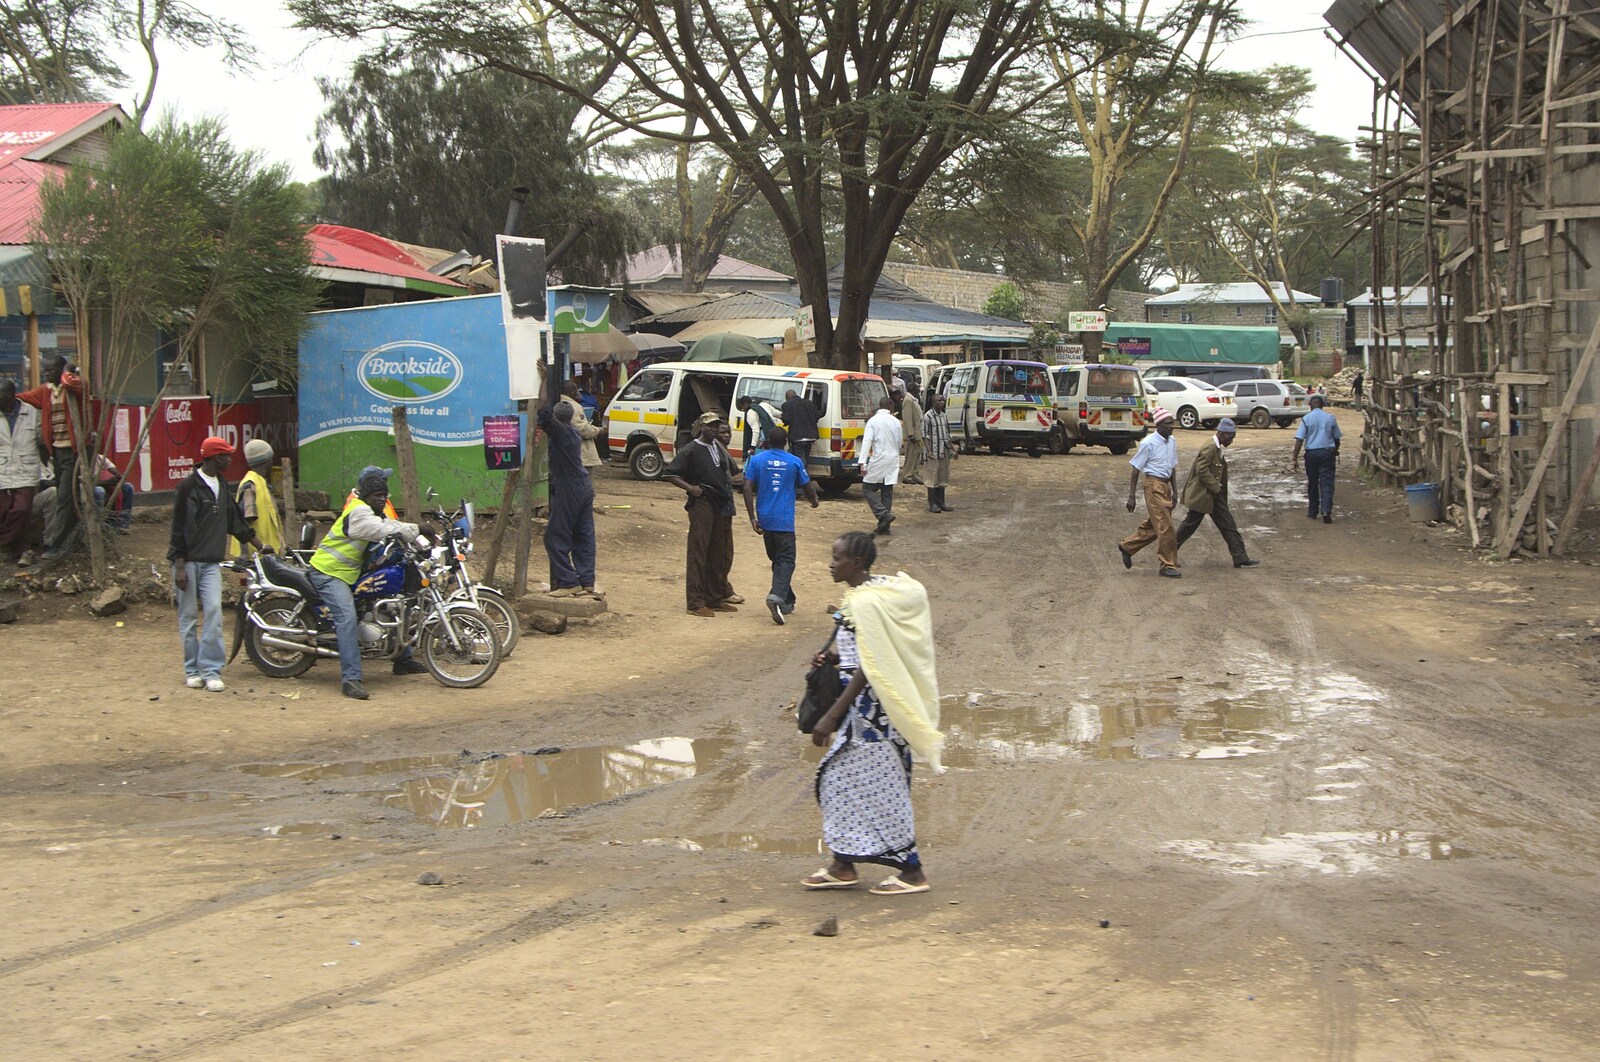 A street scene in Narok from Narok to Naivasha and Hell's Gate National Park, Kenya, Africa - 5th November 2010